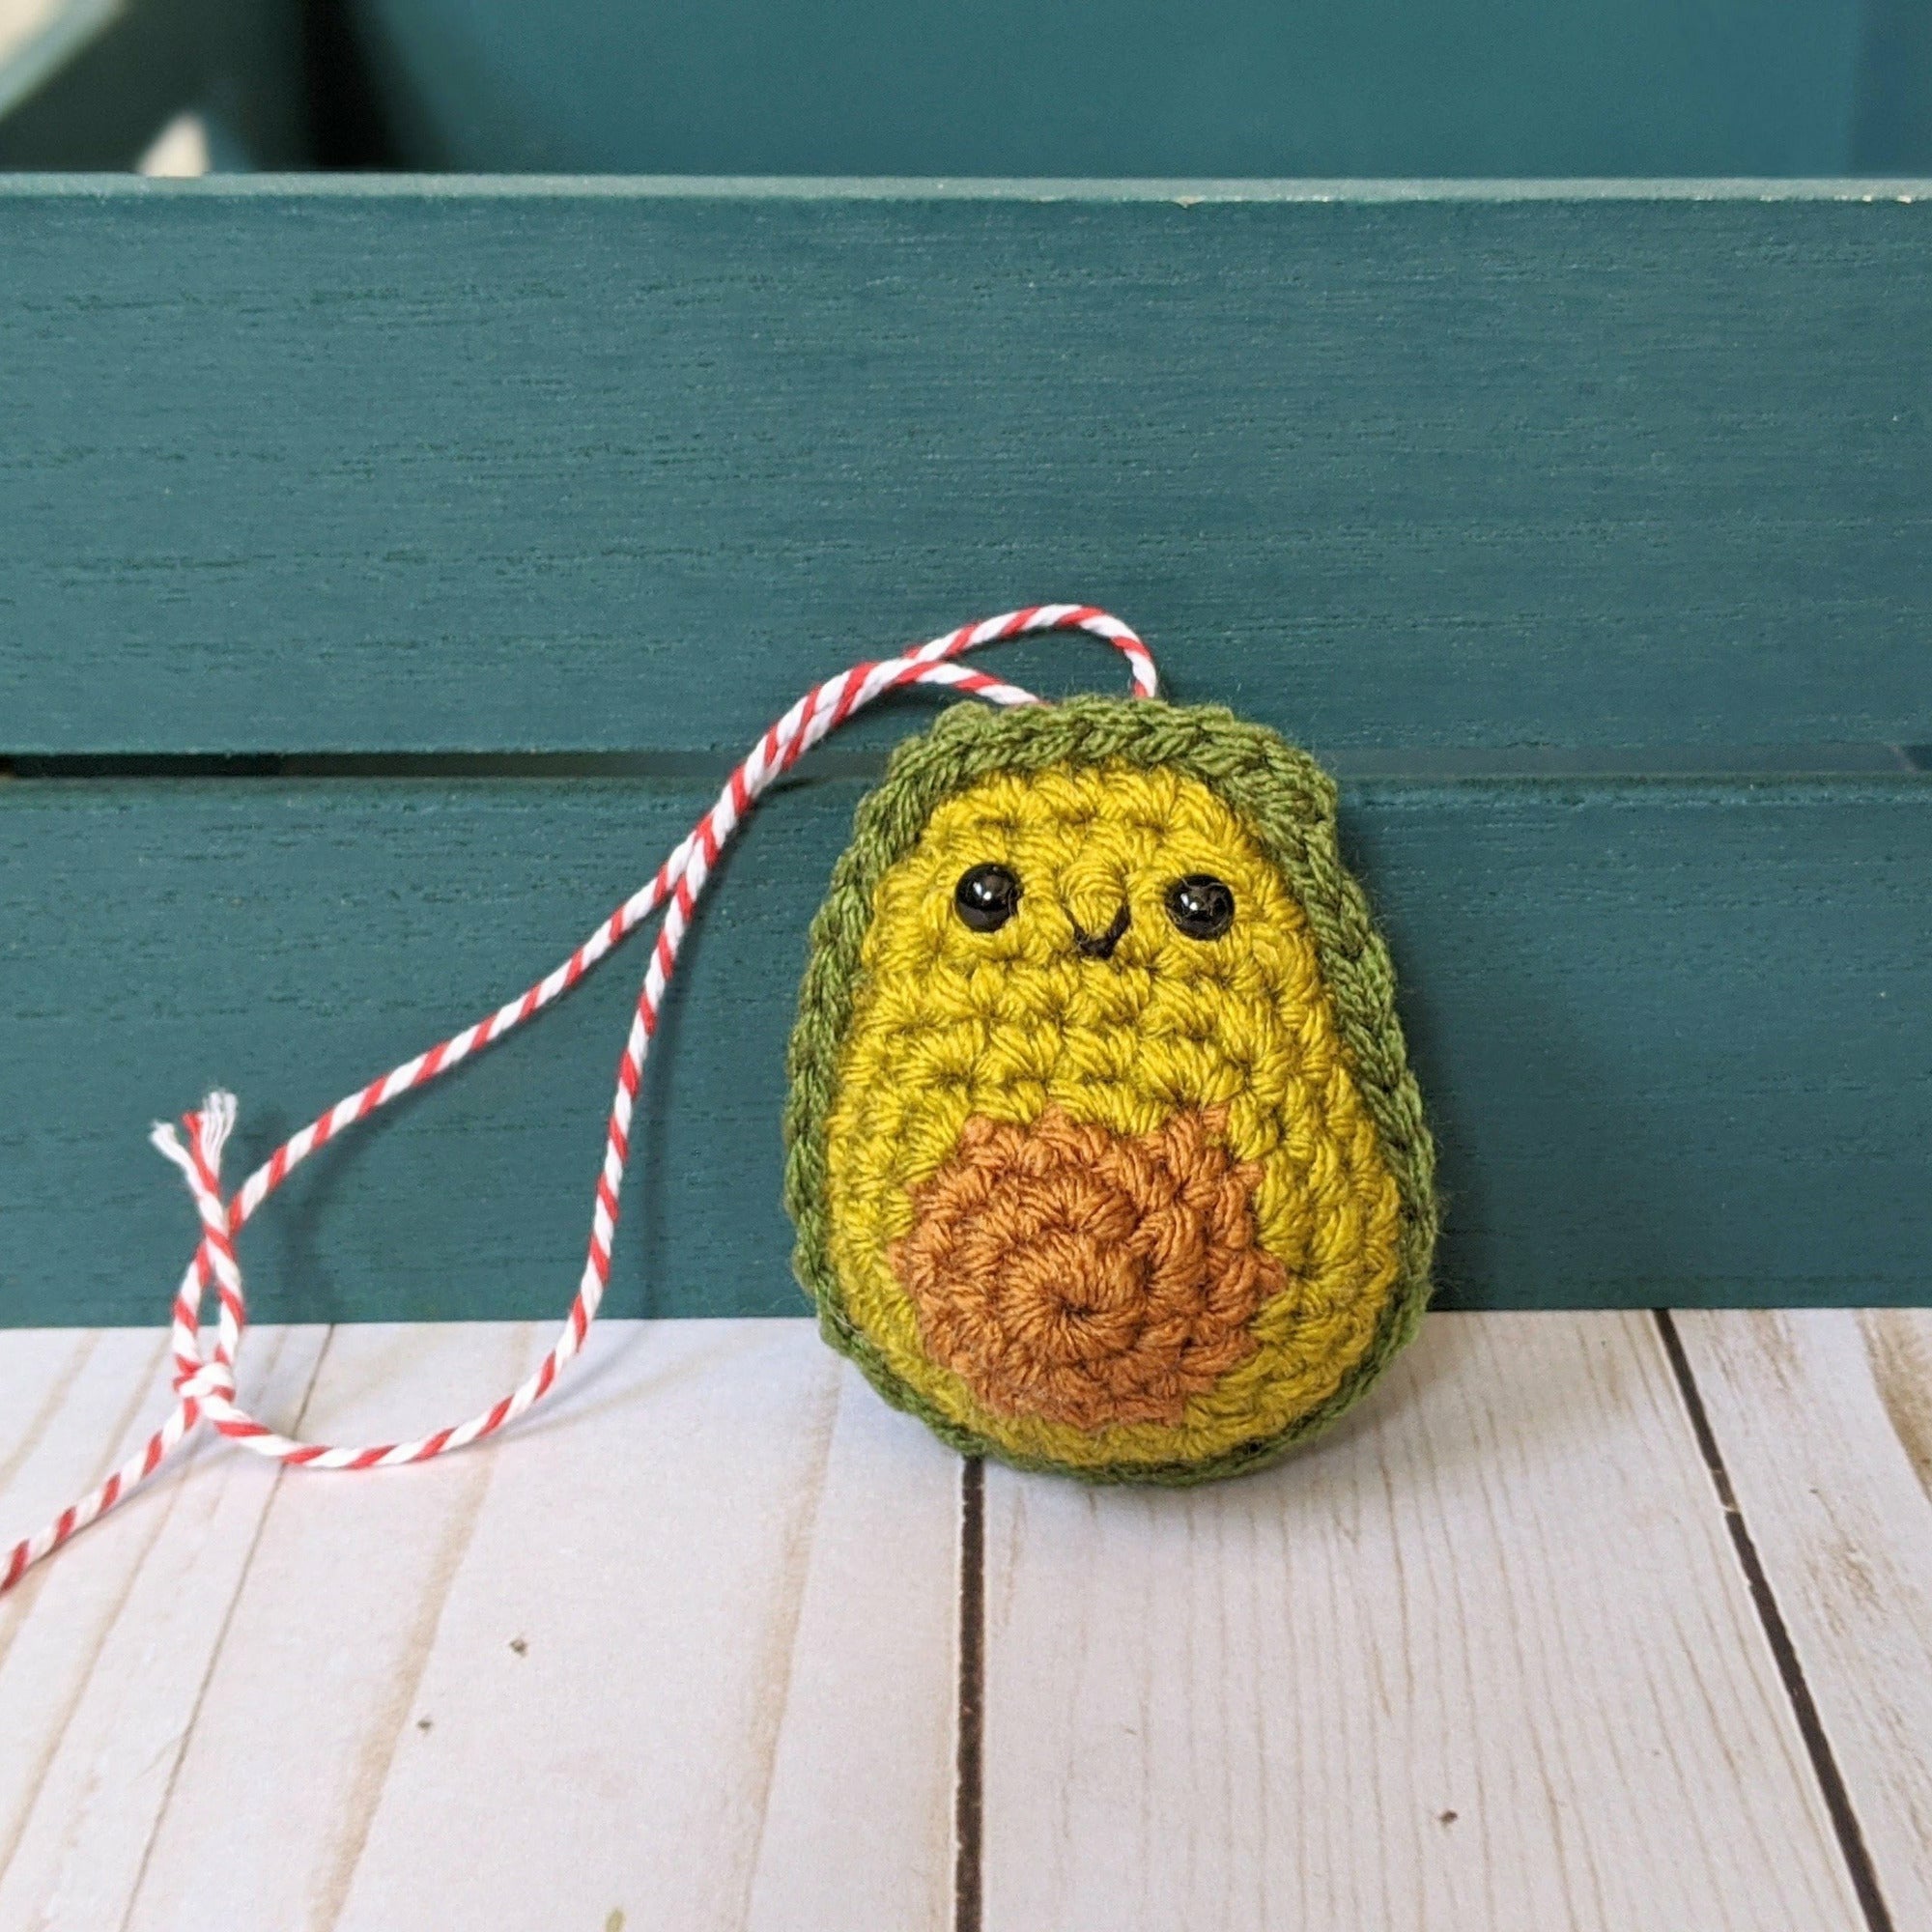  3 Pack Beginners Crochet Yarn Avocado Christmas Green